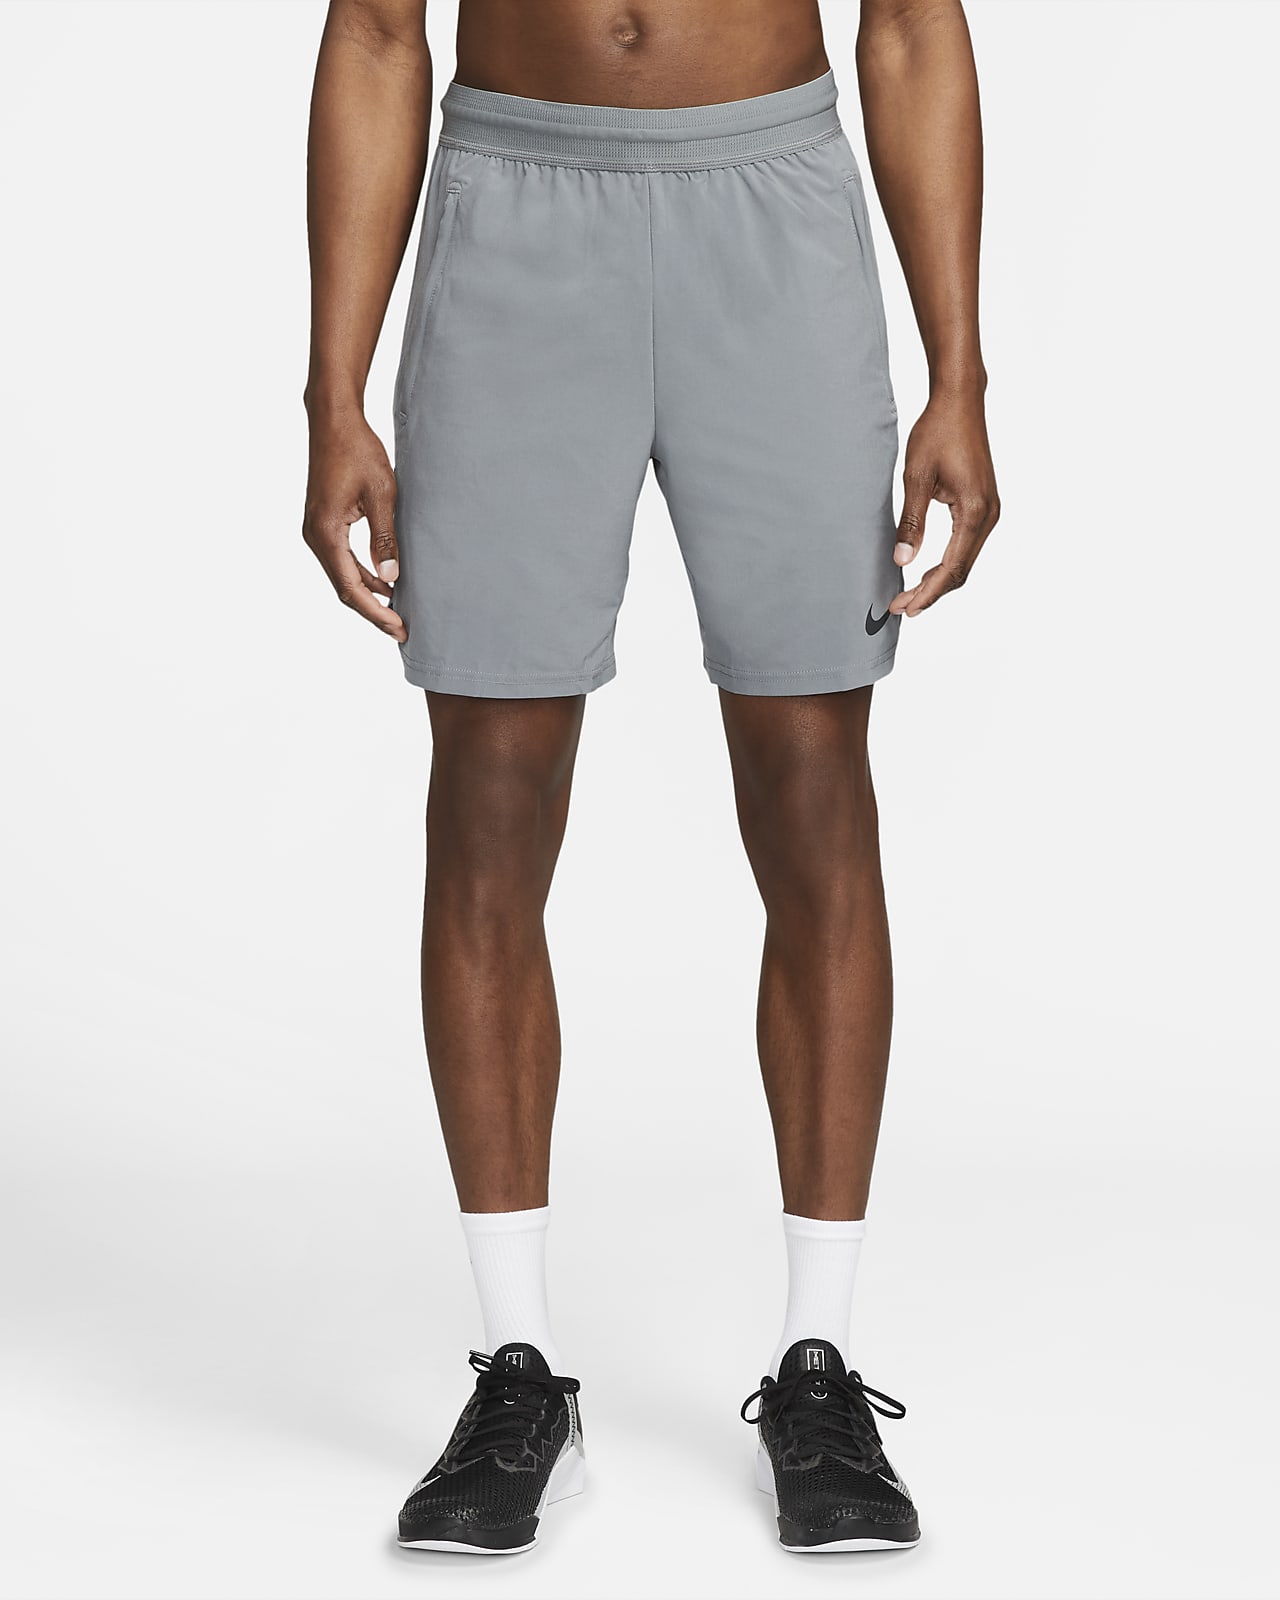 Nike Pro Dri-FIT Flex Vent Max 20 cm-es férfi edzőrövidnadrág